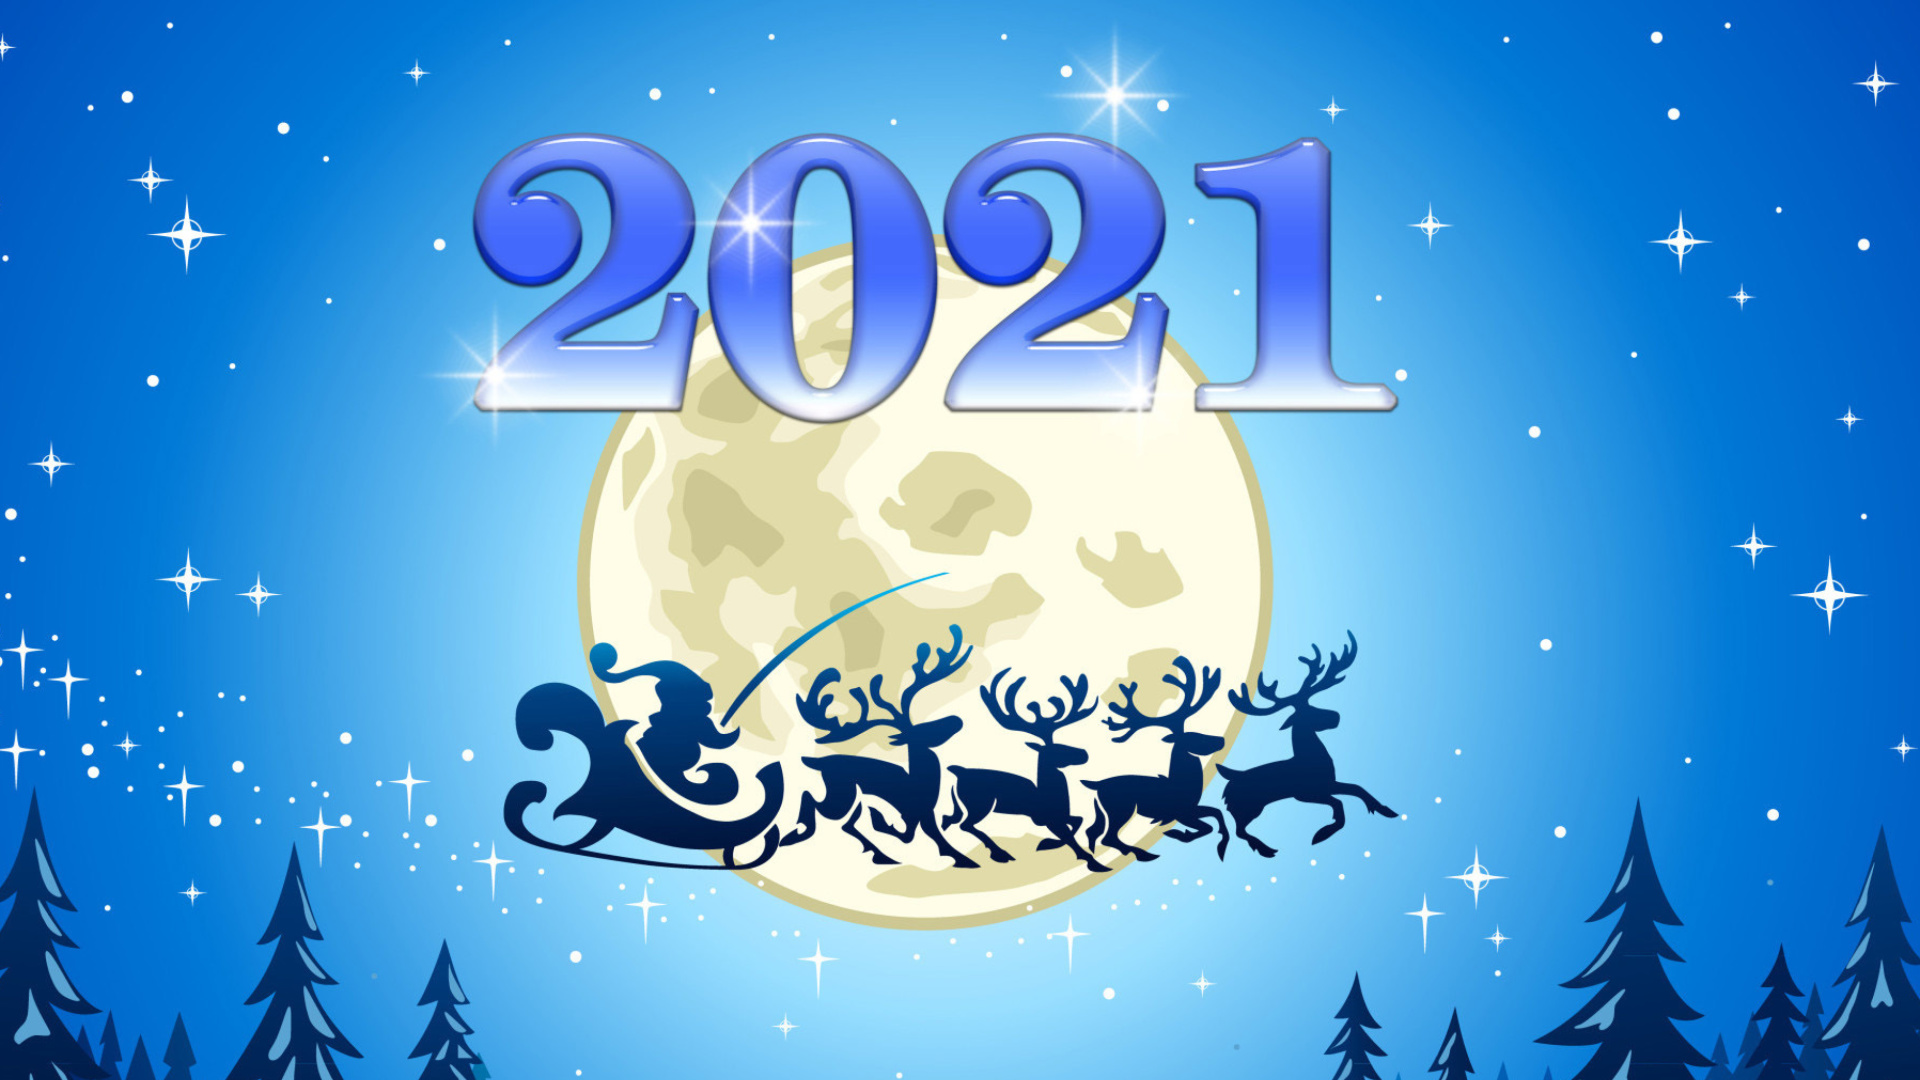 2021 New Year Night wallpaper 1920x1080